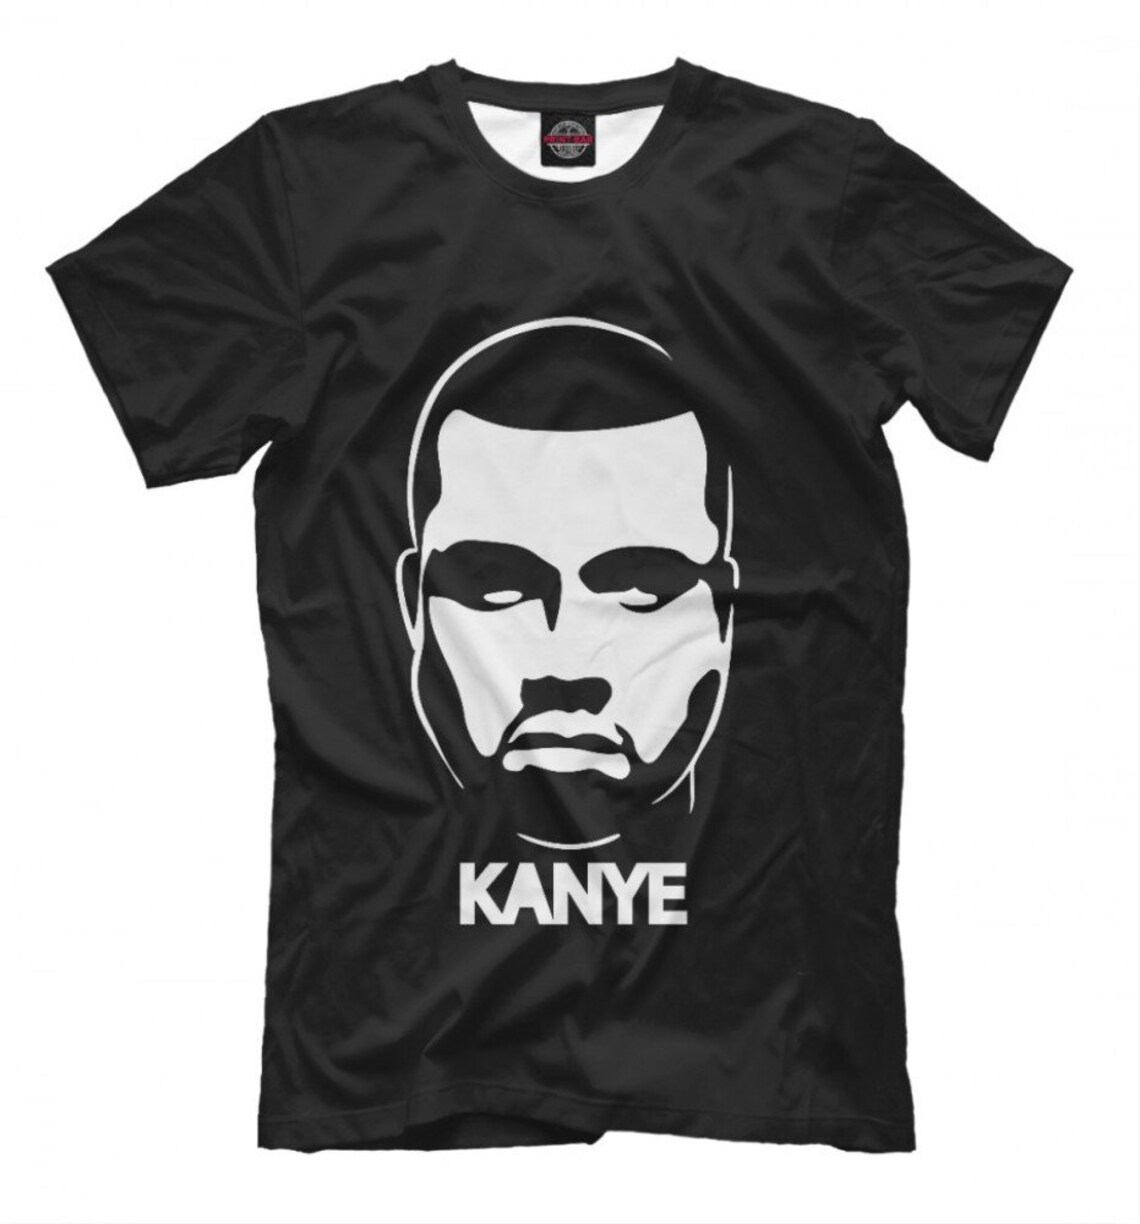 Kanye West Graphic T-Shirt Men's Women's Sizes | Etsy